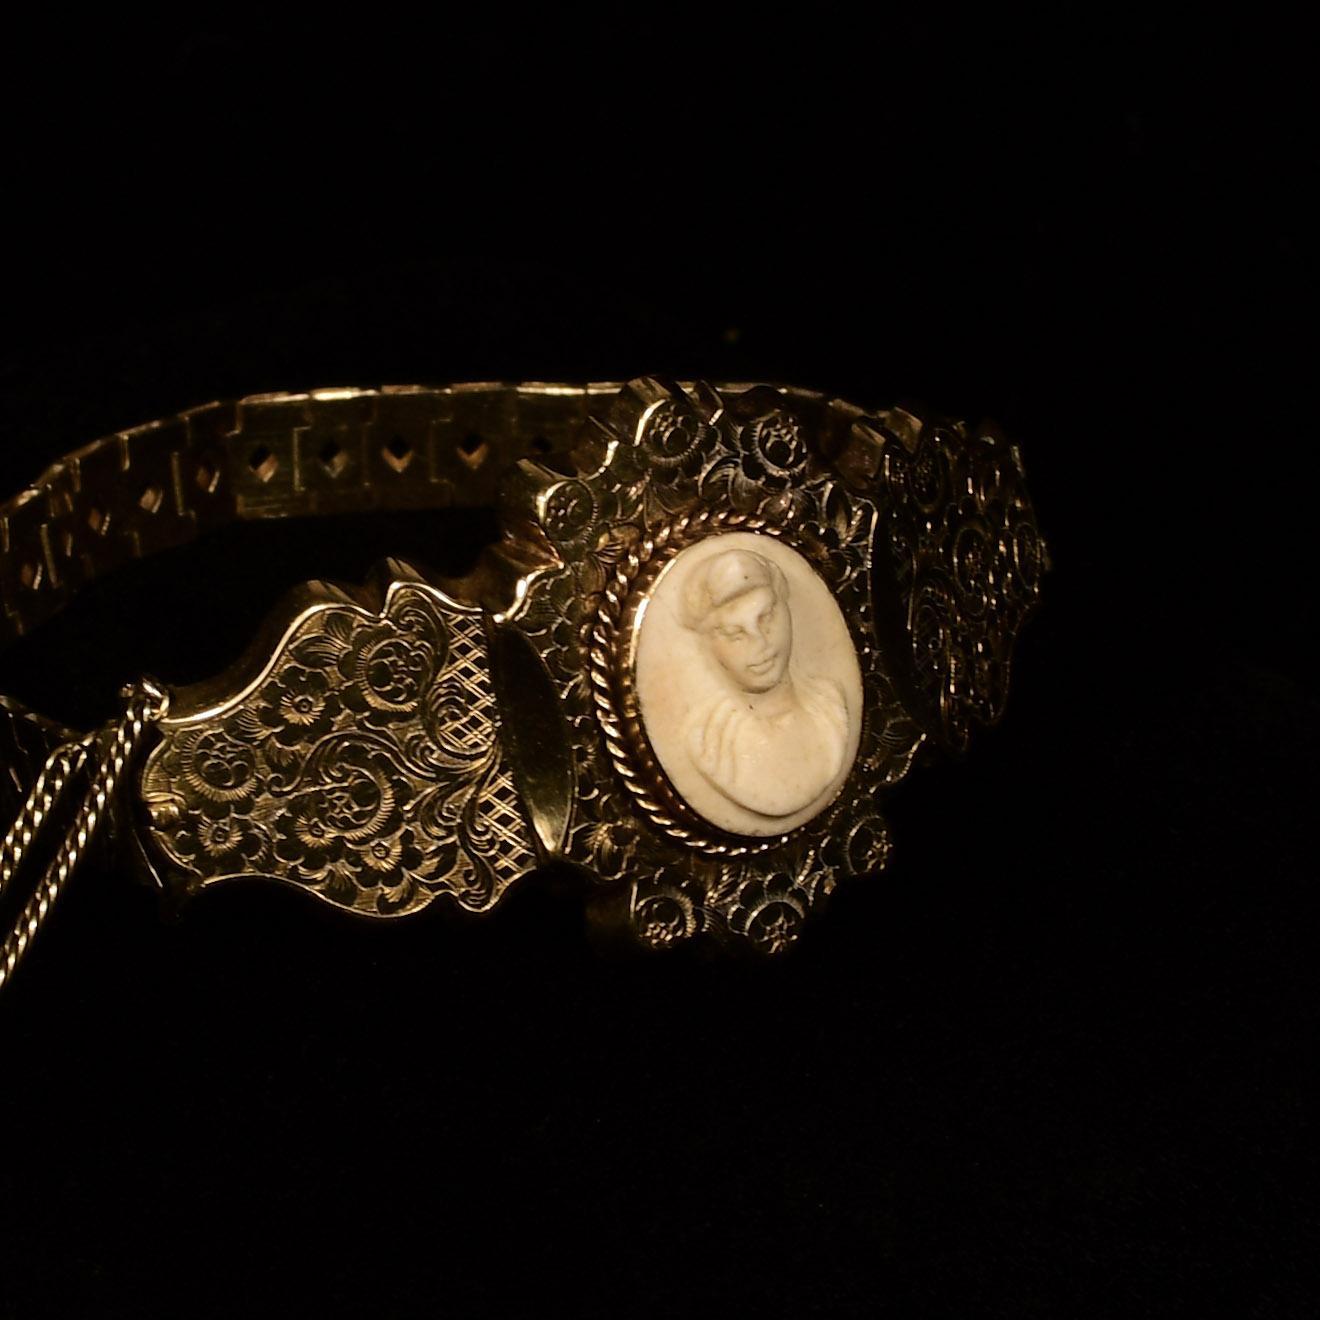 Antique Victorian Cameo Bracelet with Ornate Floral Engraving 14K Gold 5